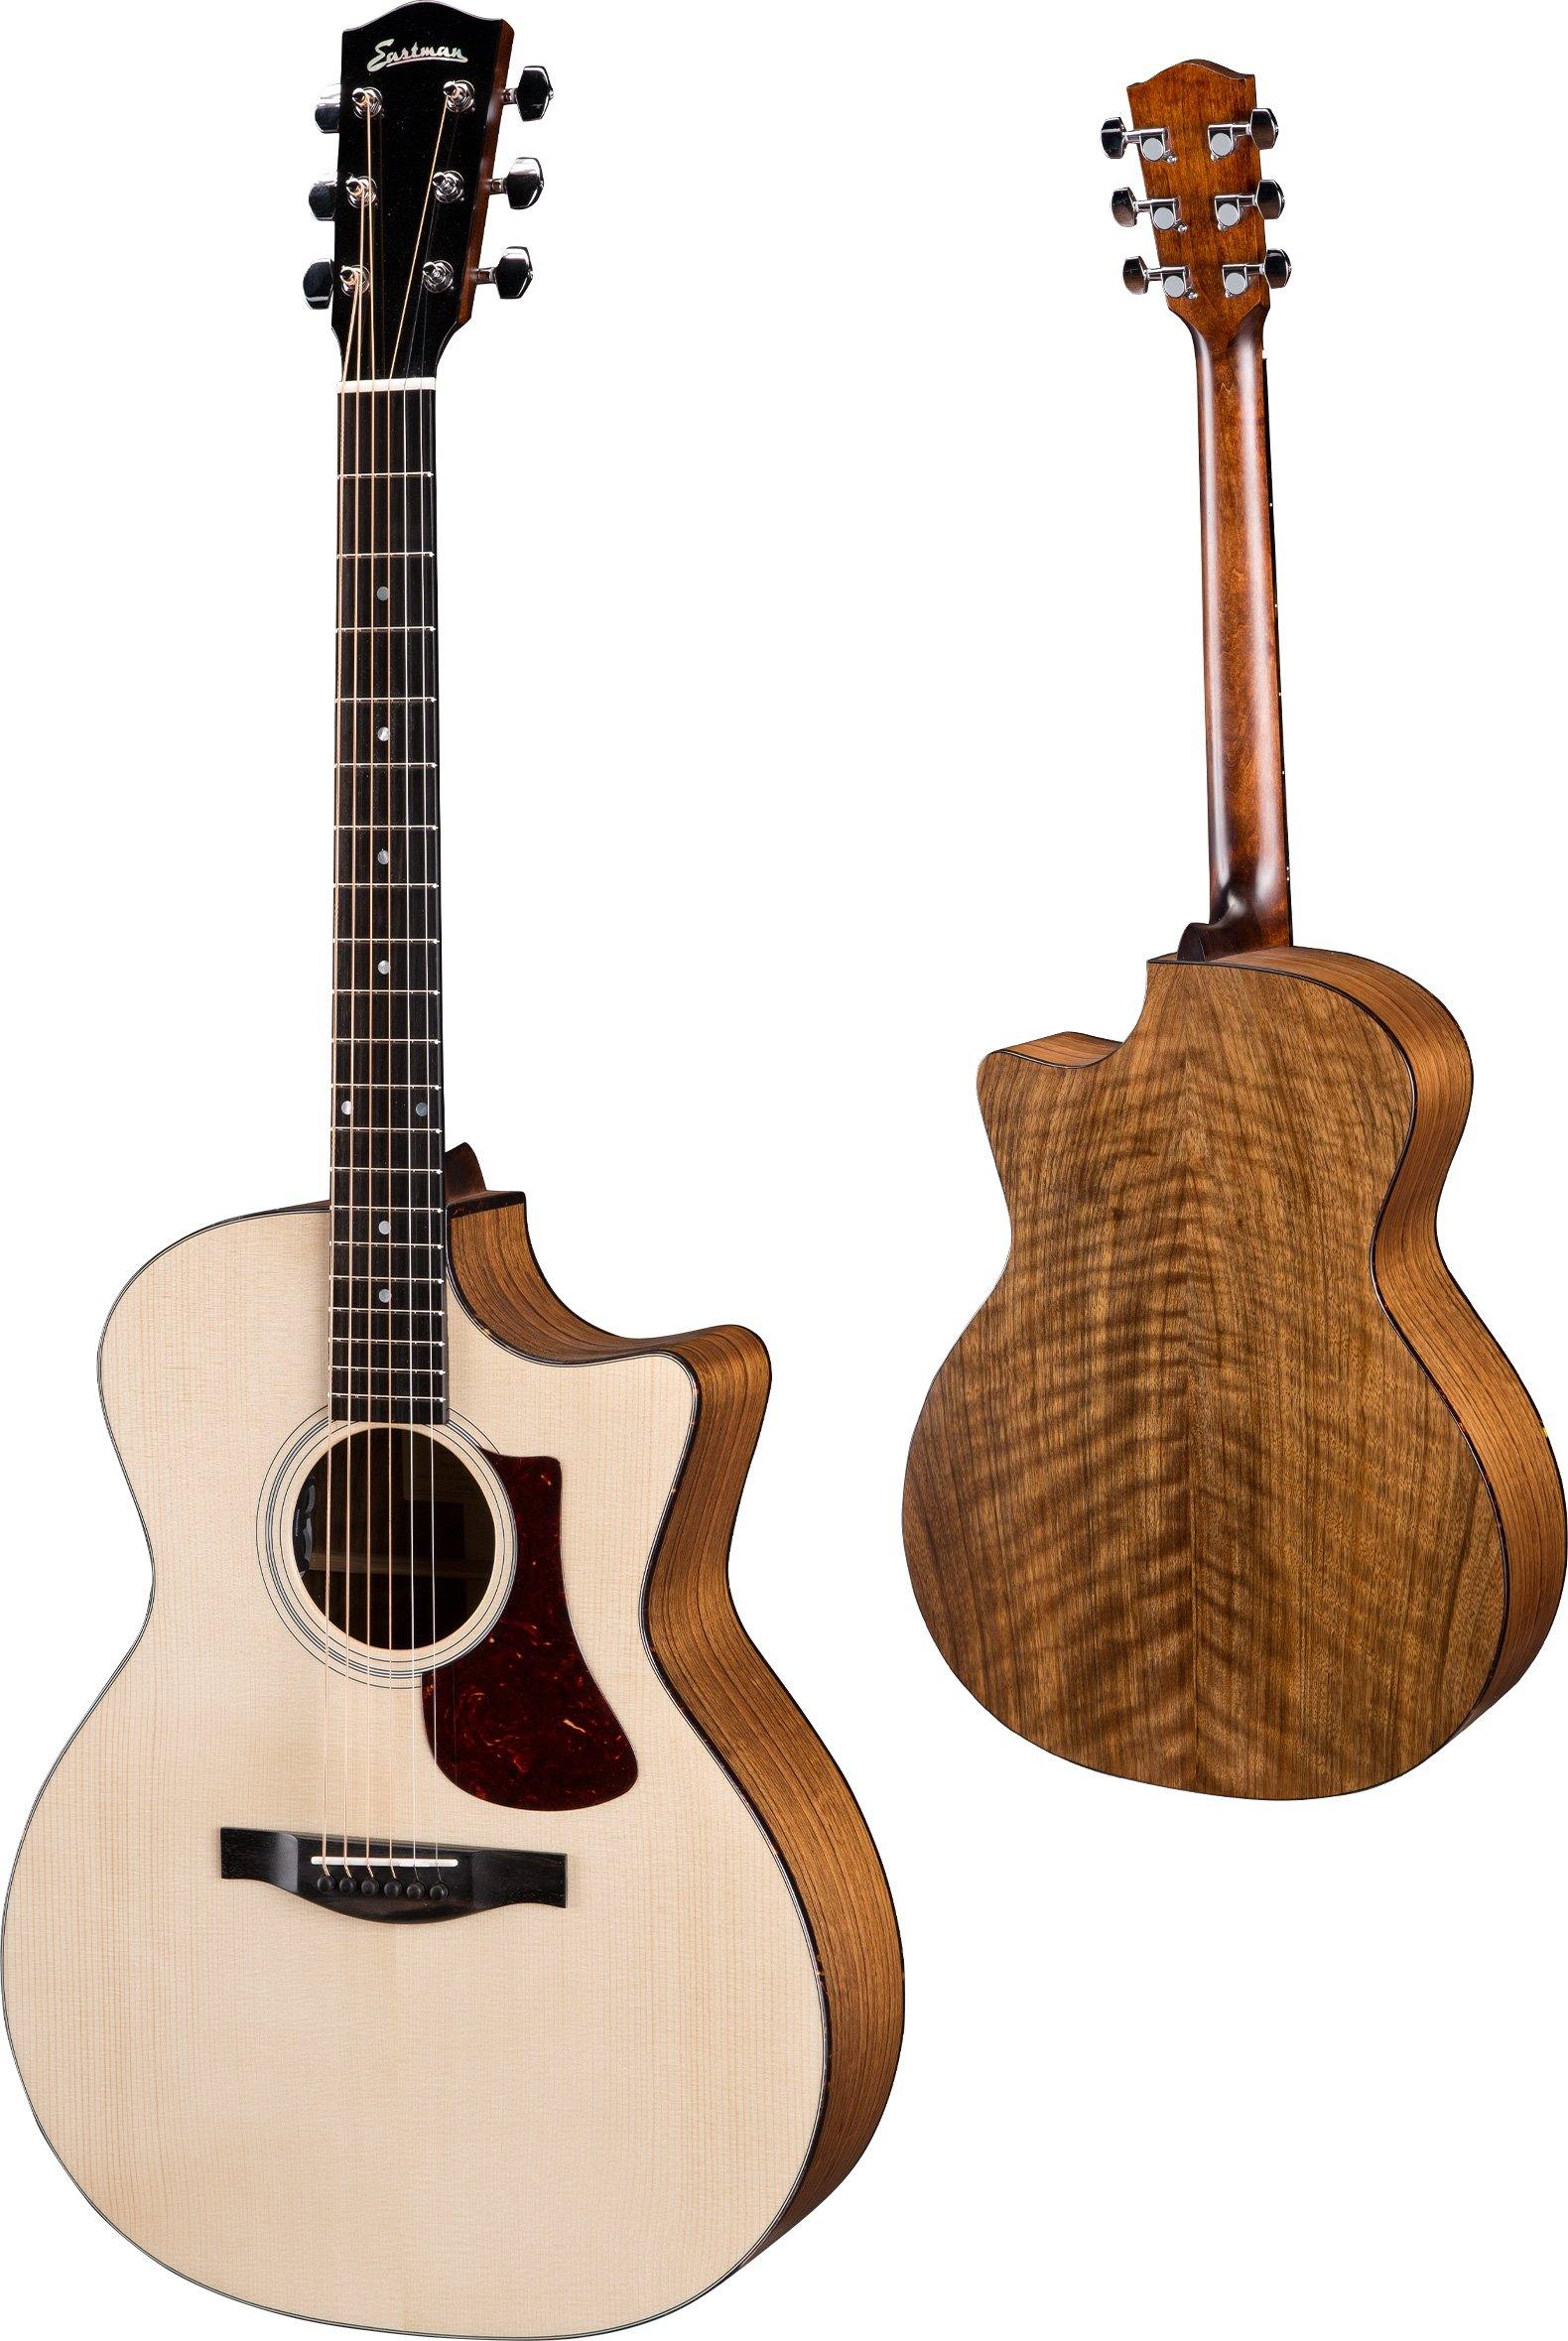 Eastman AC222CE OV Electro Acoustic Guitar, Electro Acoustic Guitar for sale at Richards Guitars.